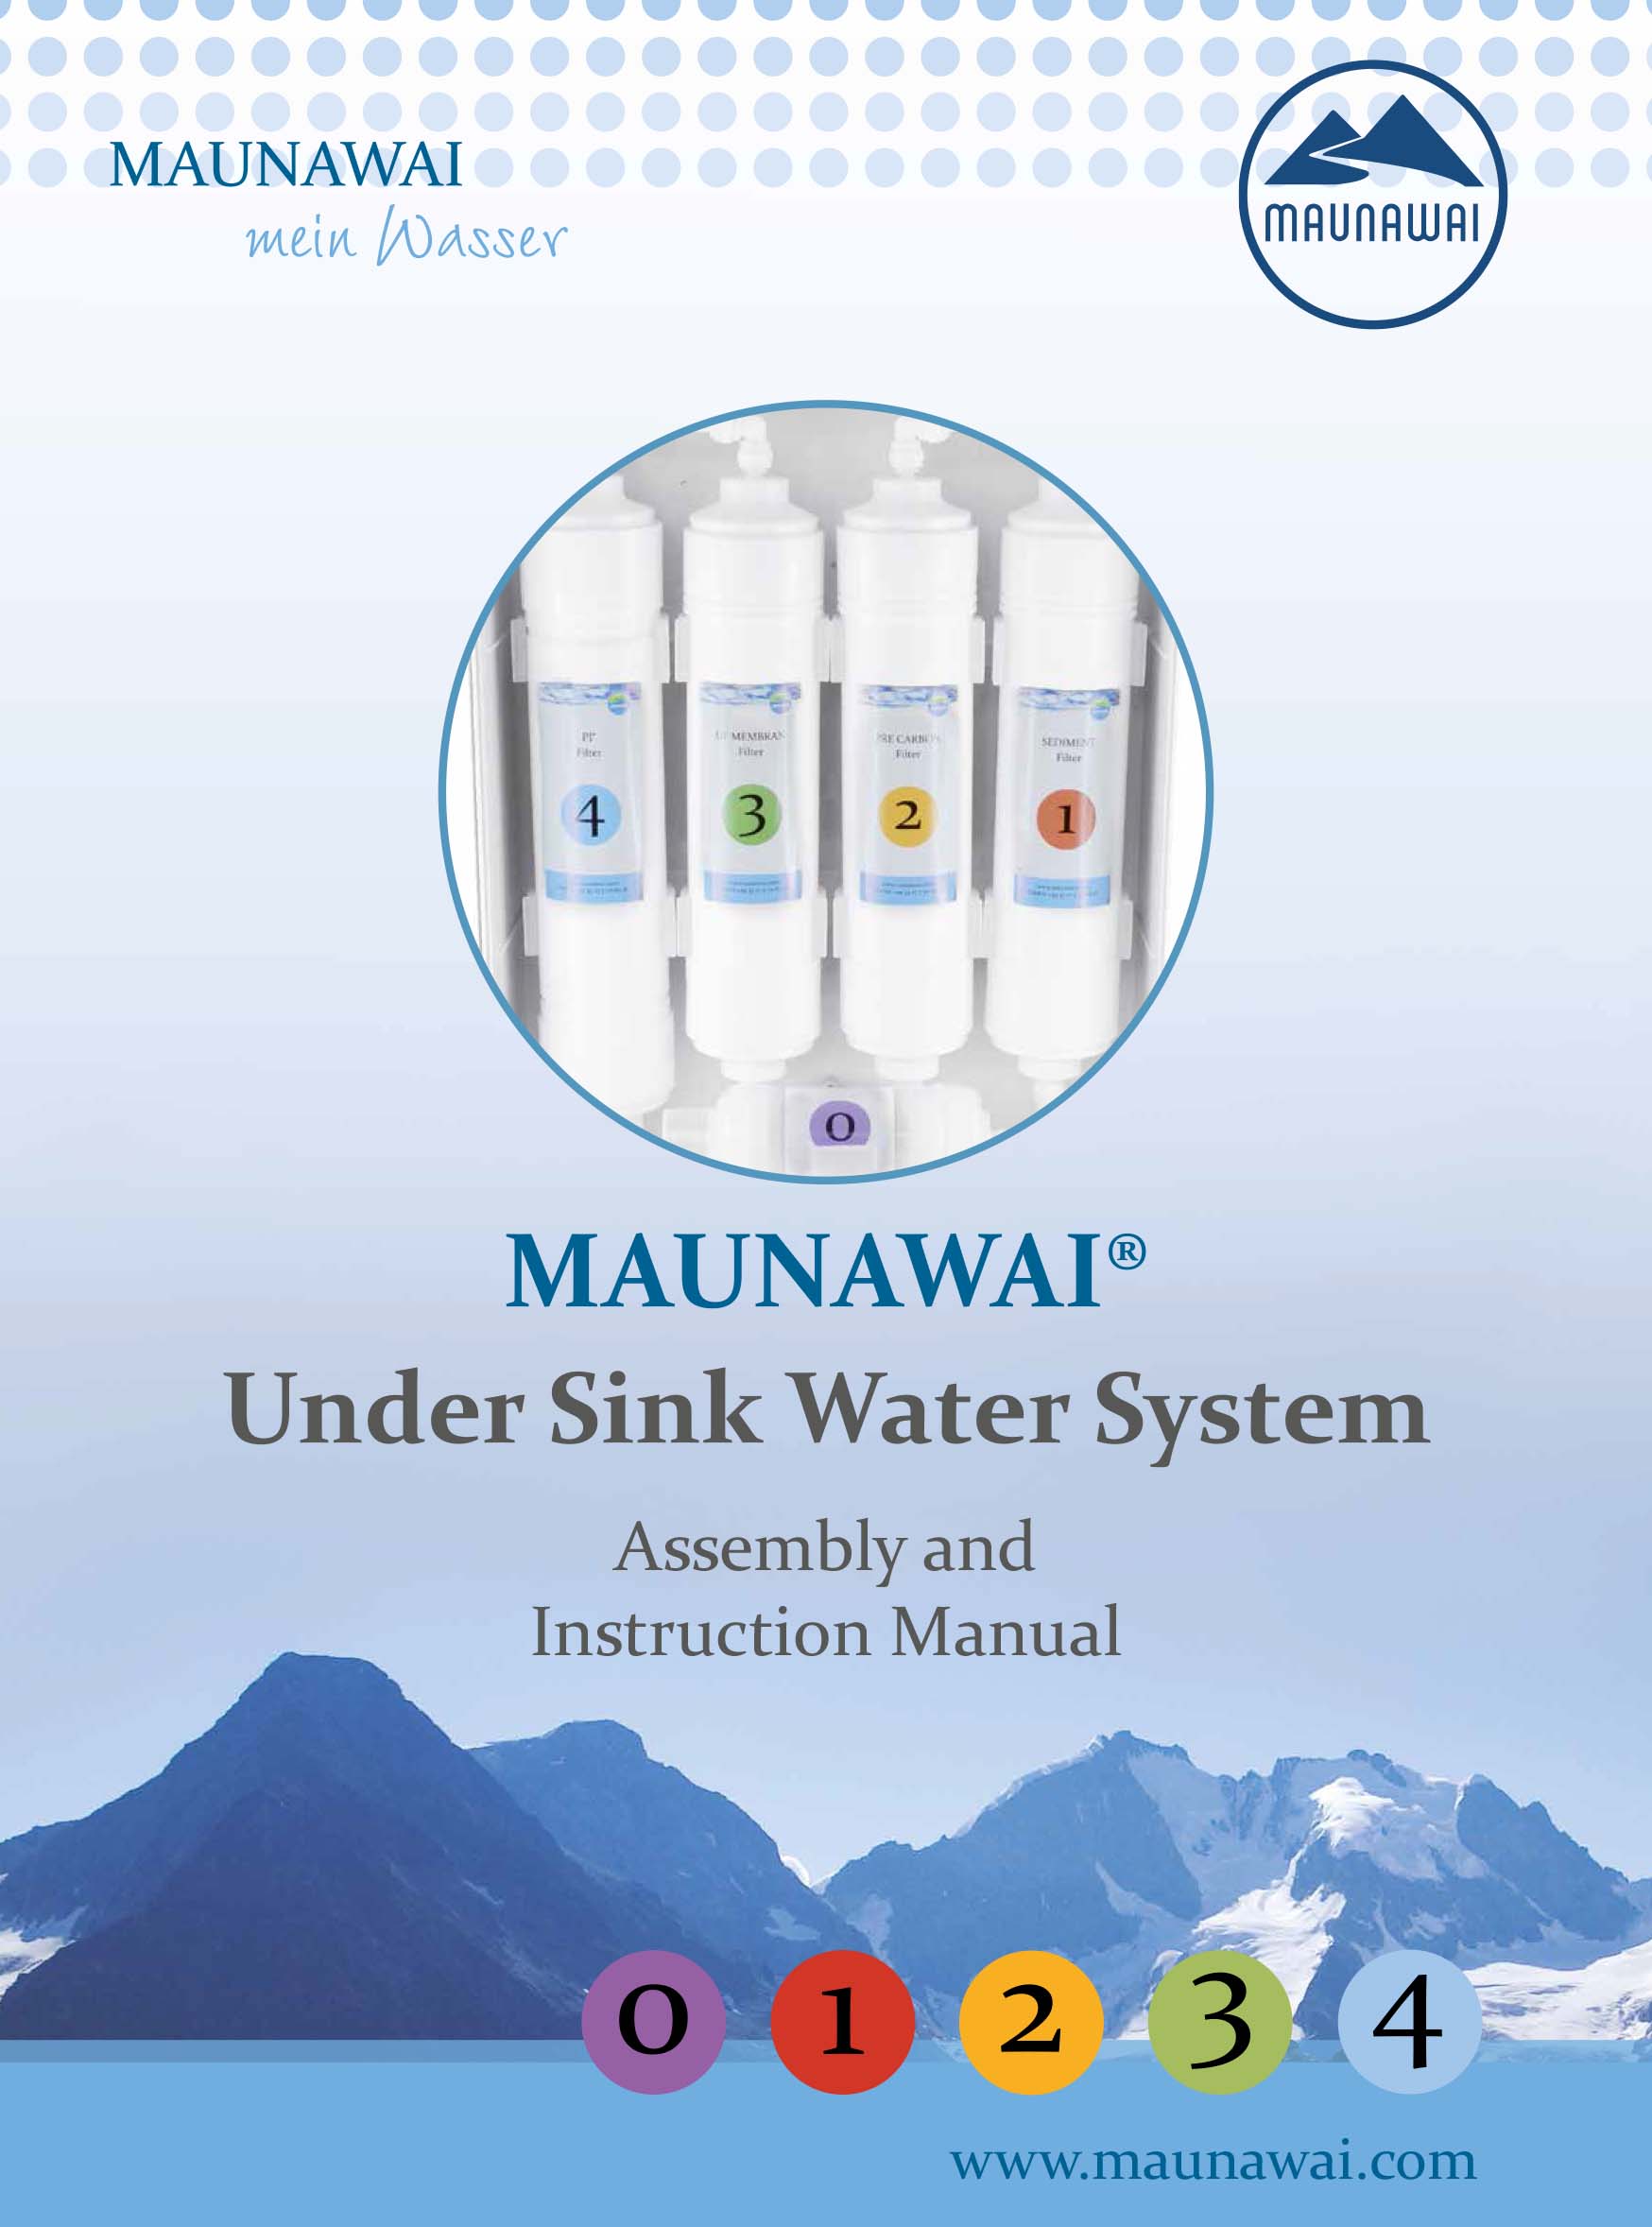 MAUNAWAI-under-sink-assembly-instructions-1.jpg